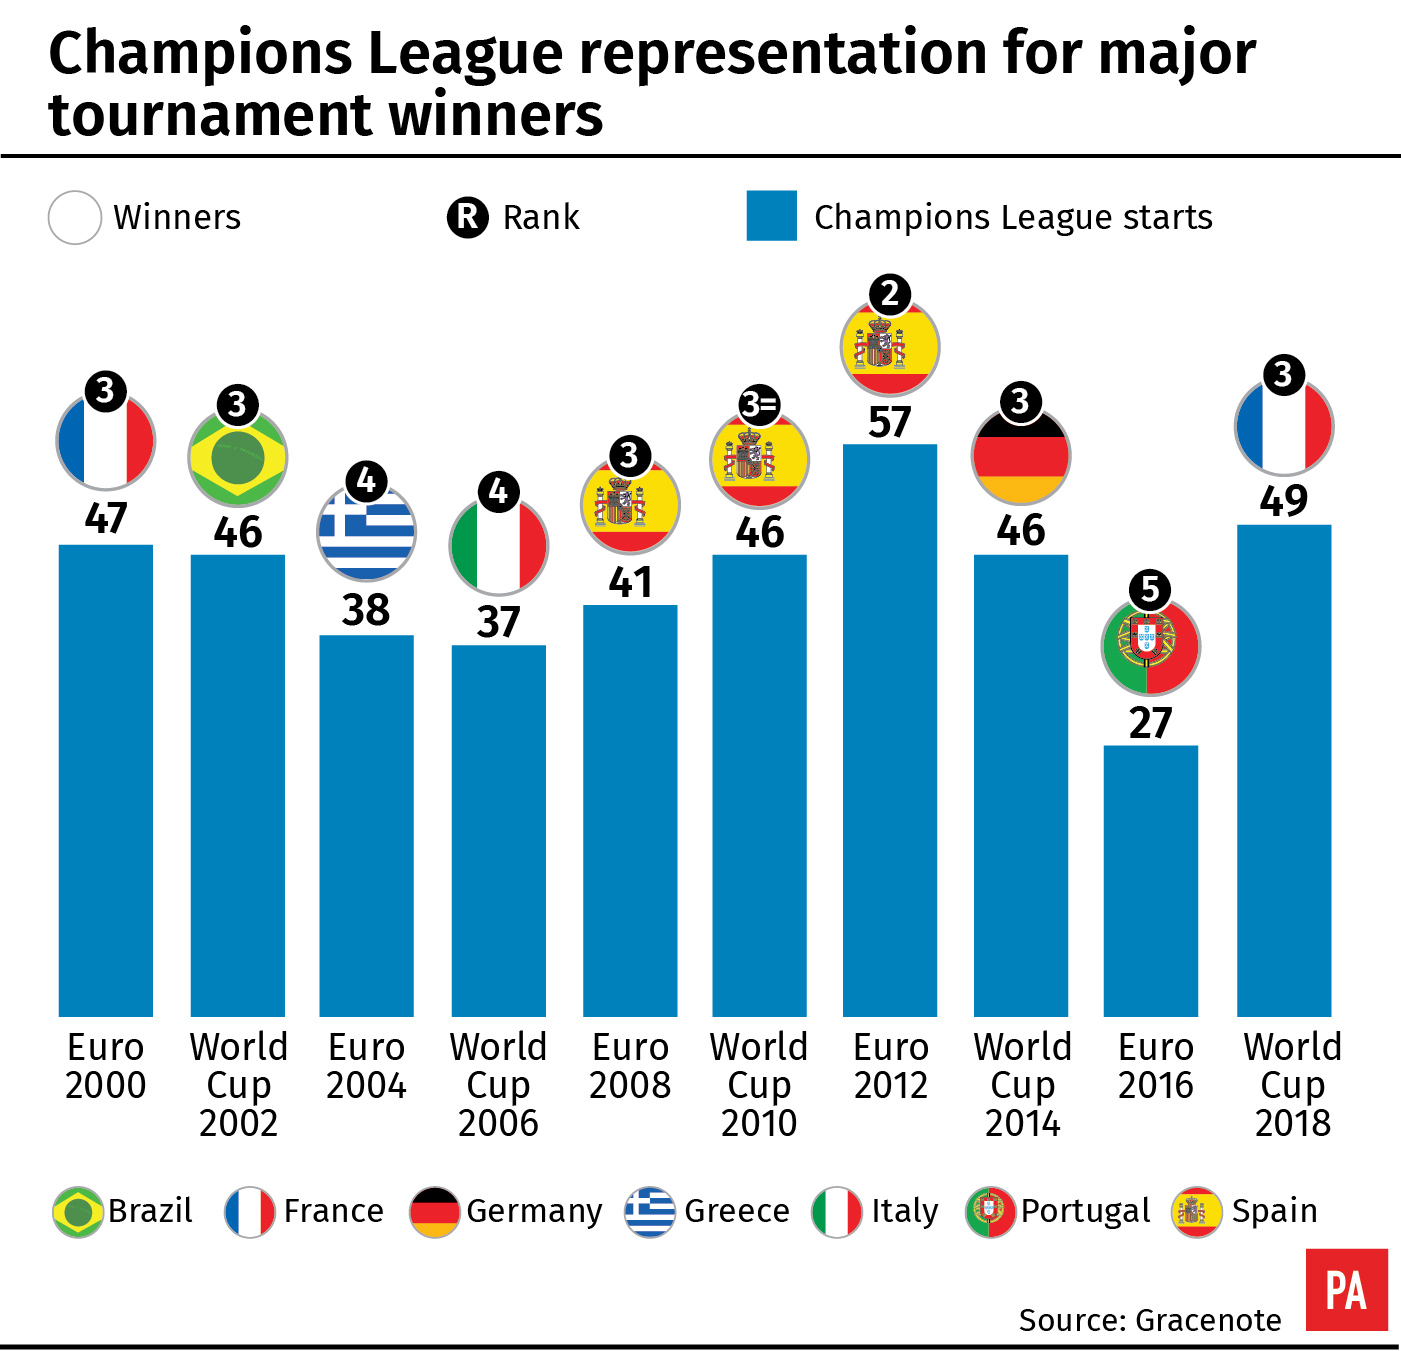 Champions League representation for major tournament winners